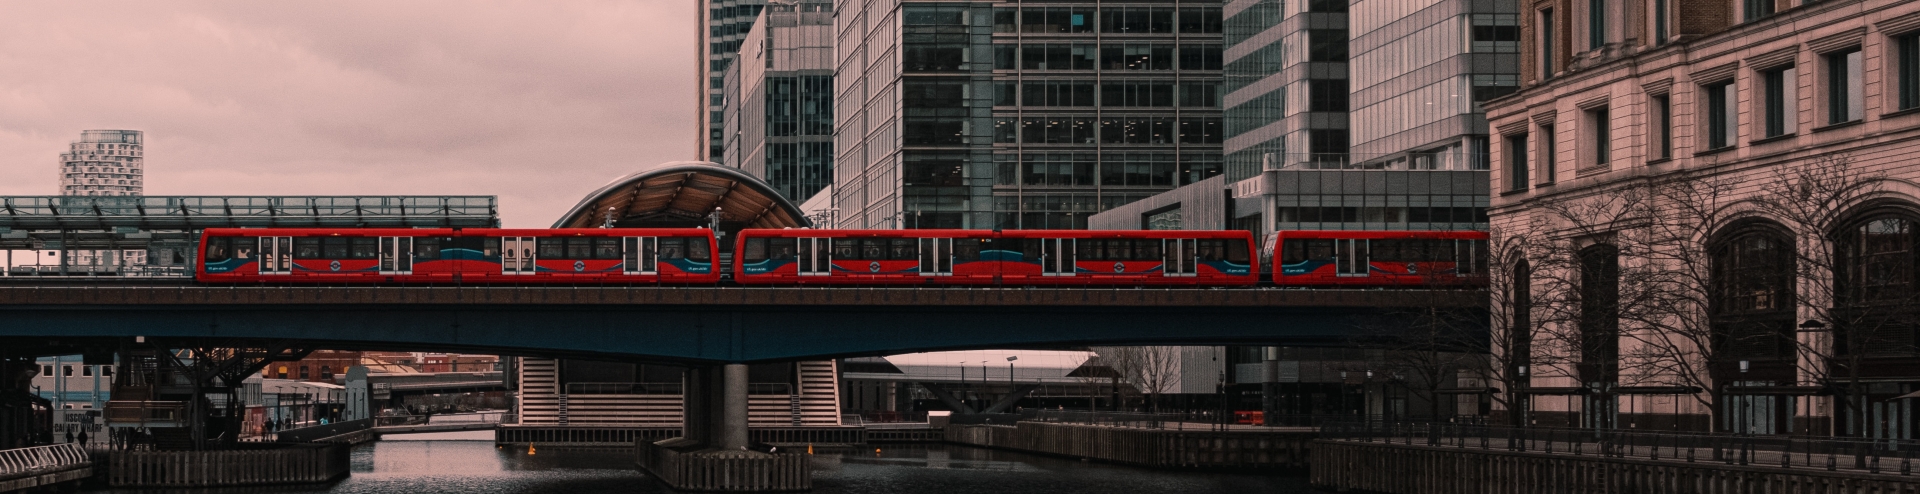 Red DLR train crossing bridge in Canary Wharf in moody light